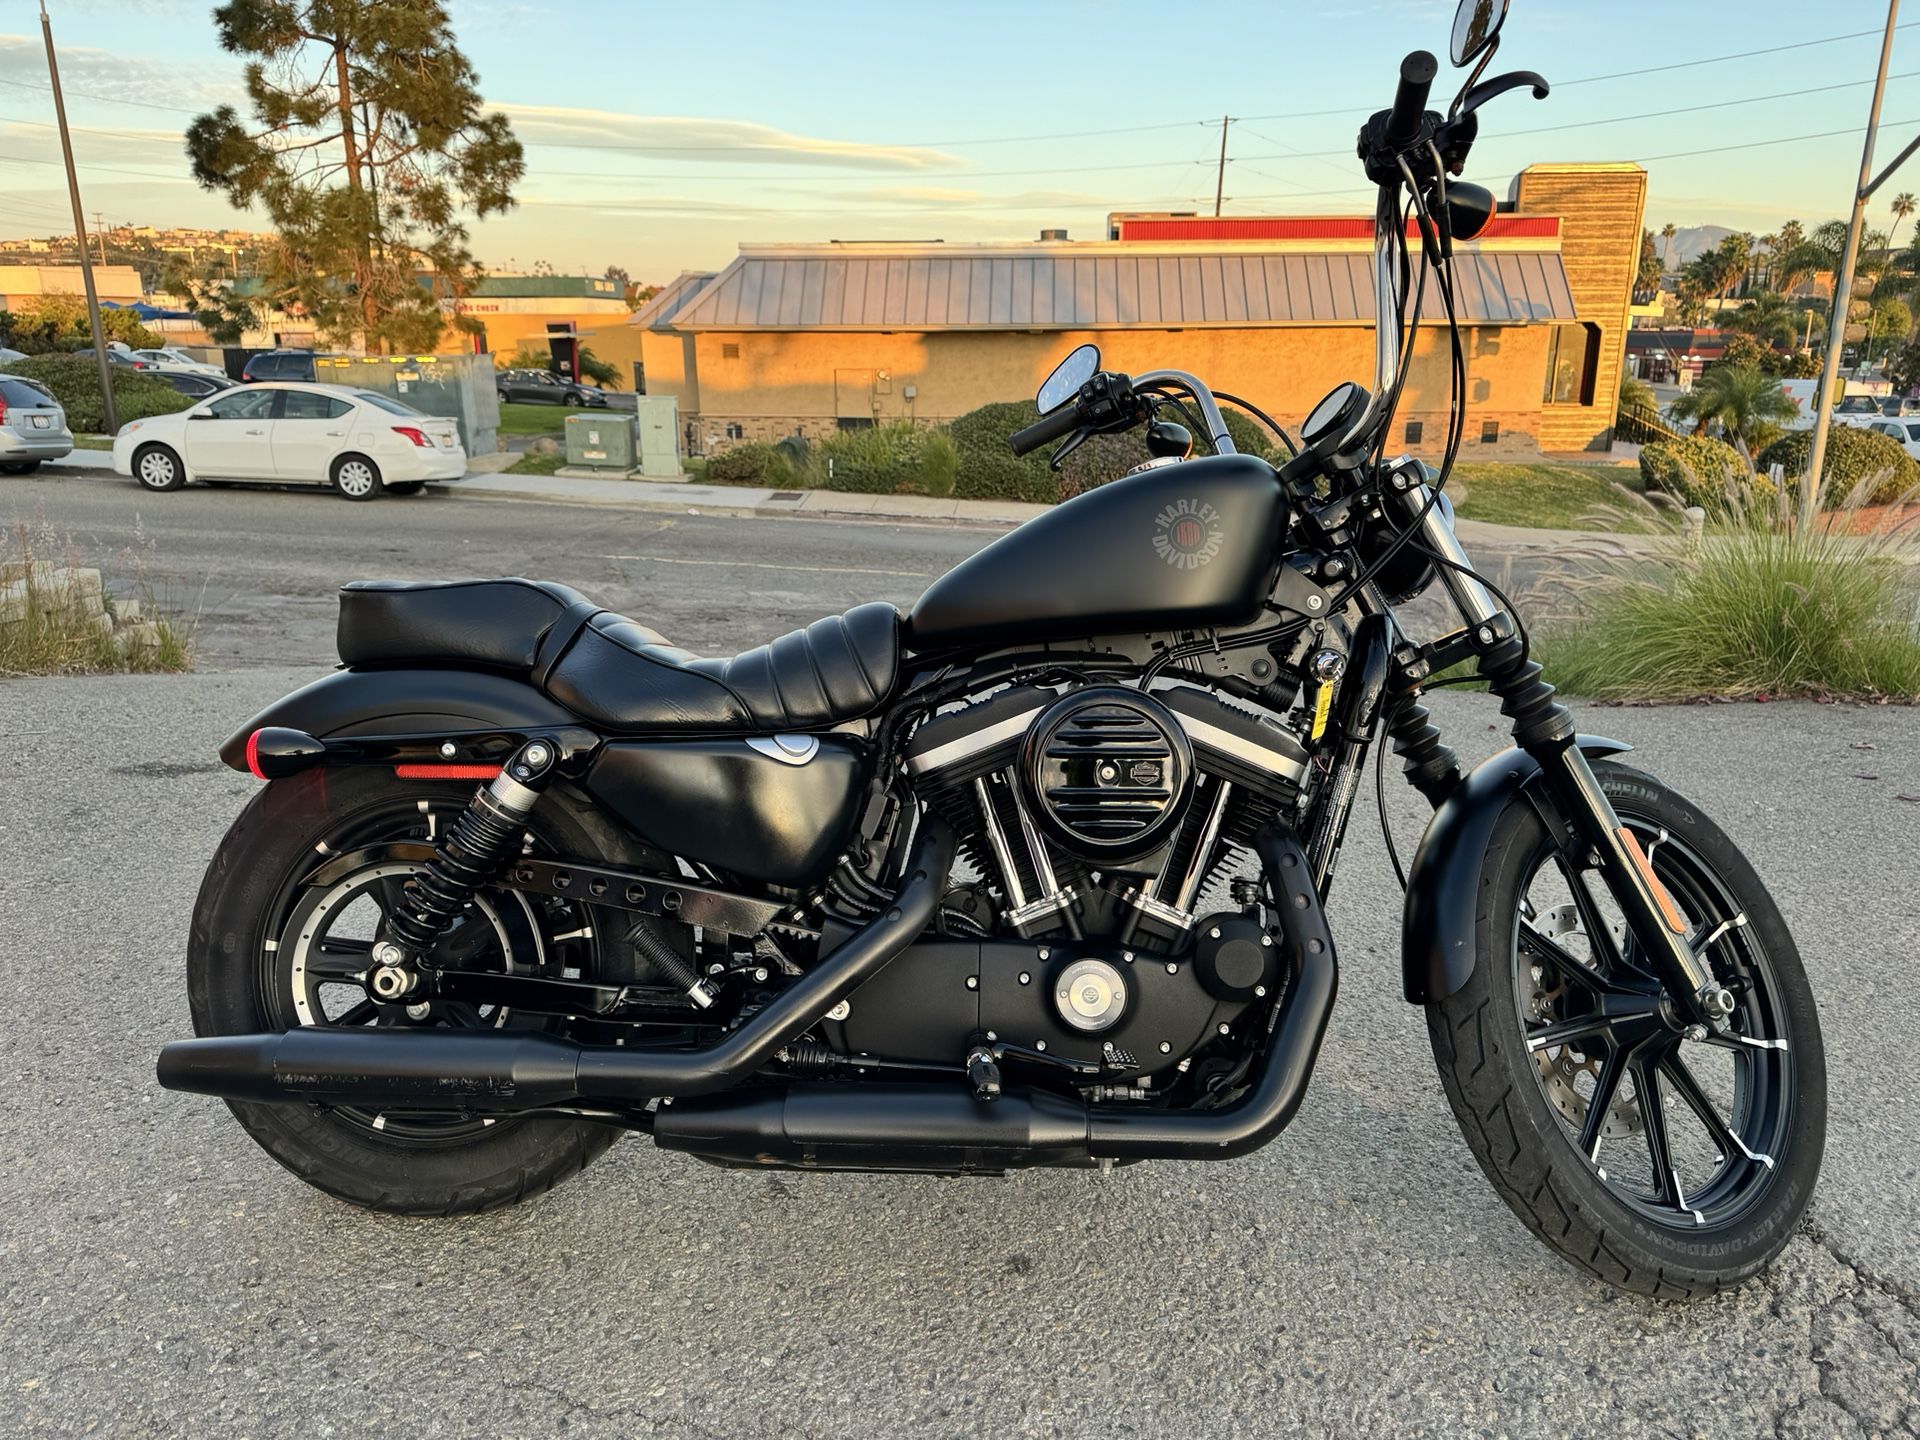 2020 Harley Davidson 883 Iron 